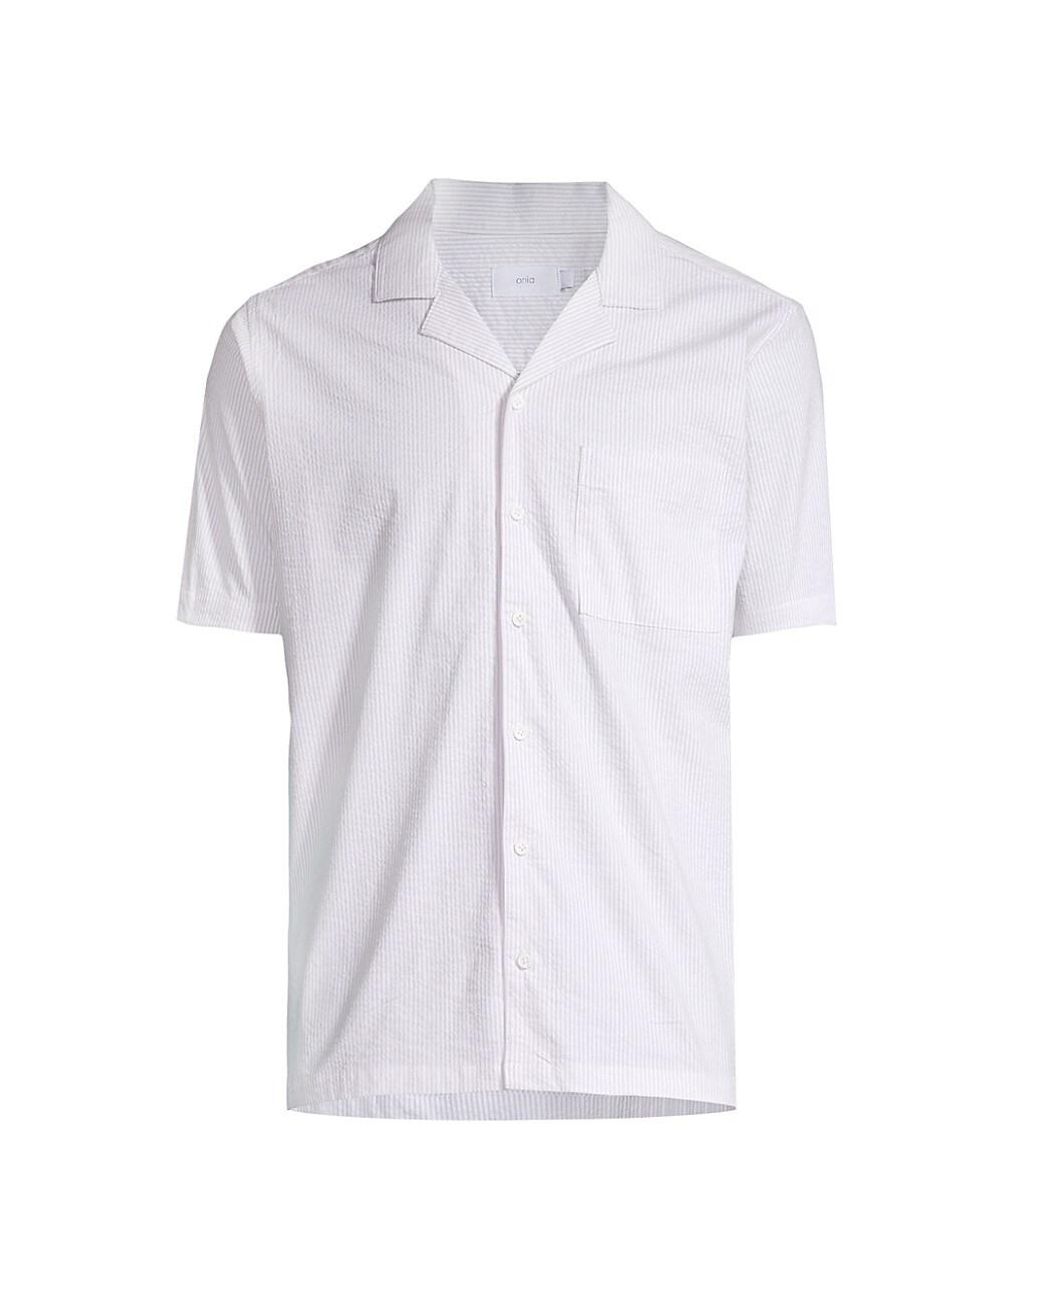 Onia Cotton Seersucker Camp Shirt in Stone (White) for Men | Lyst